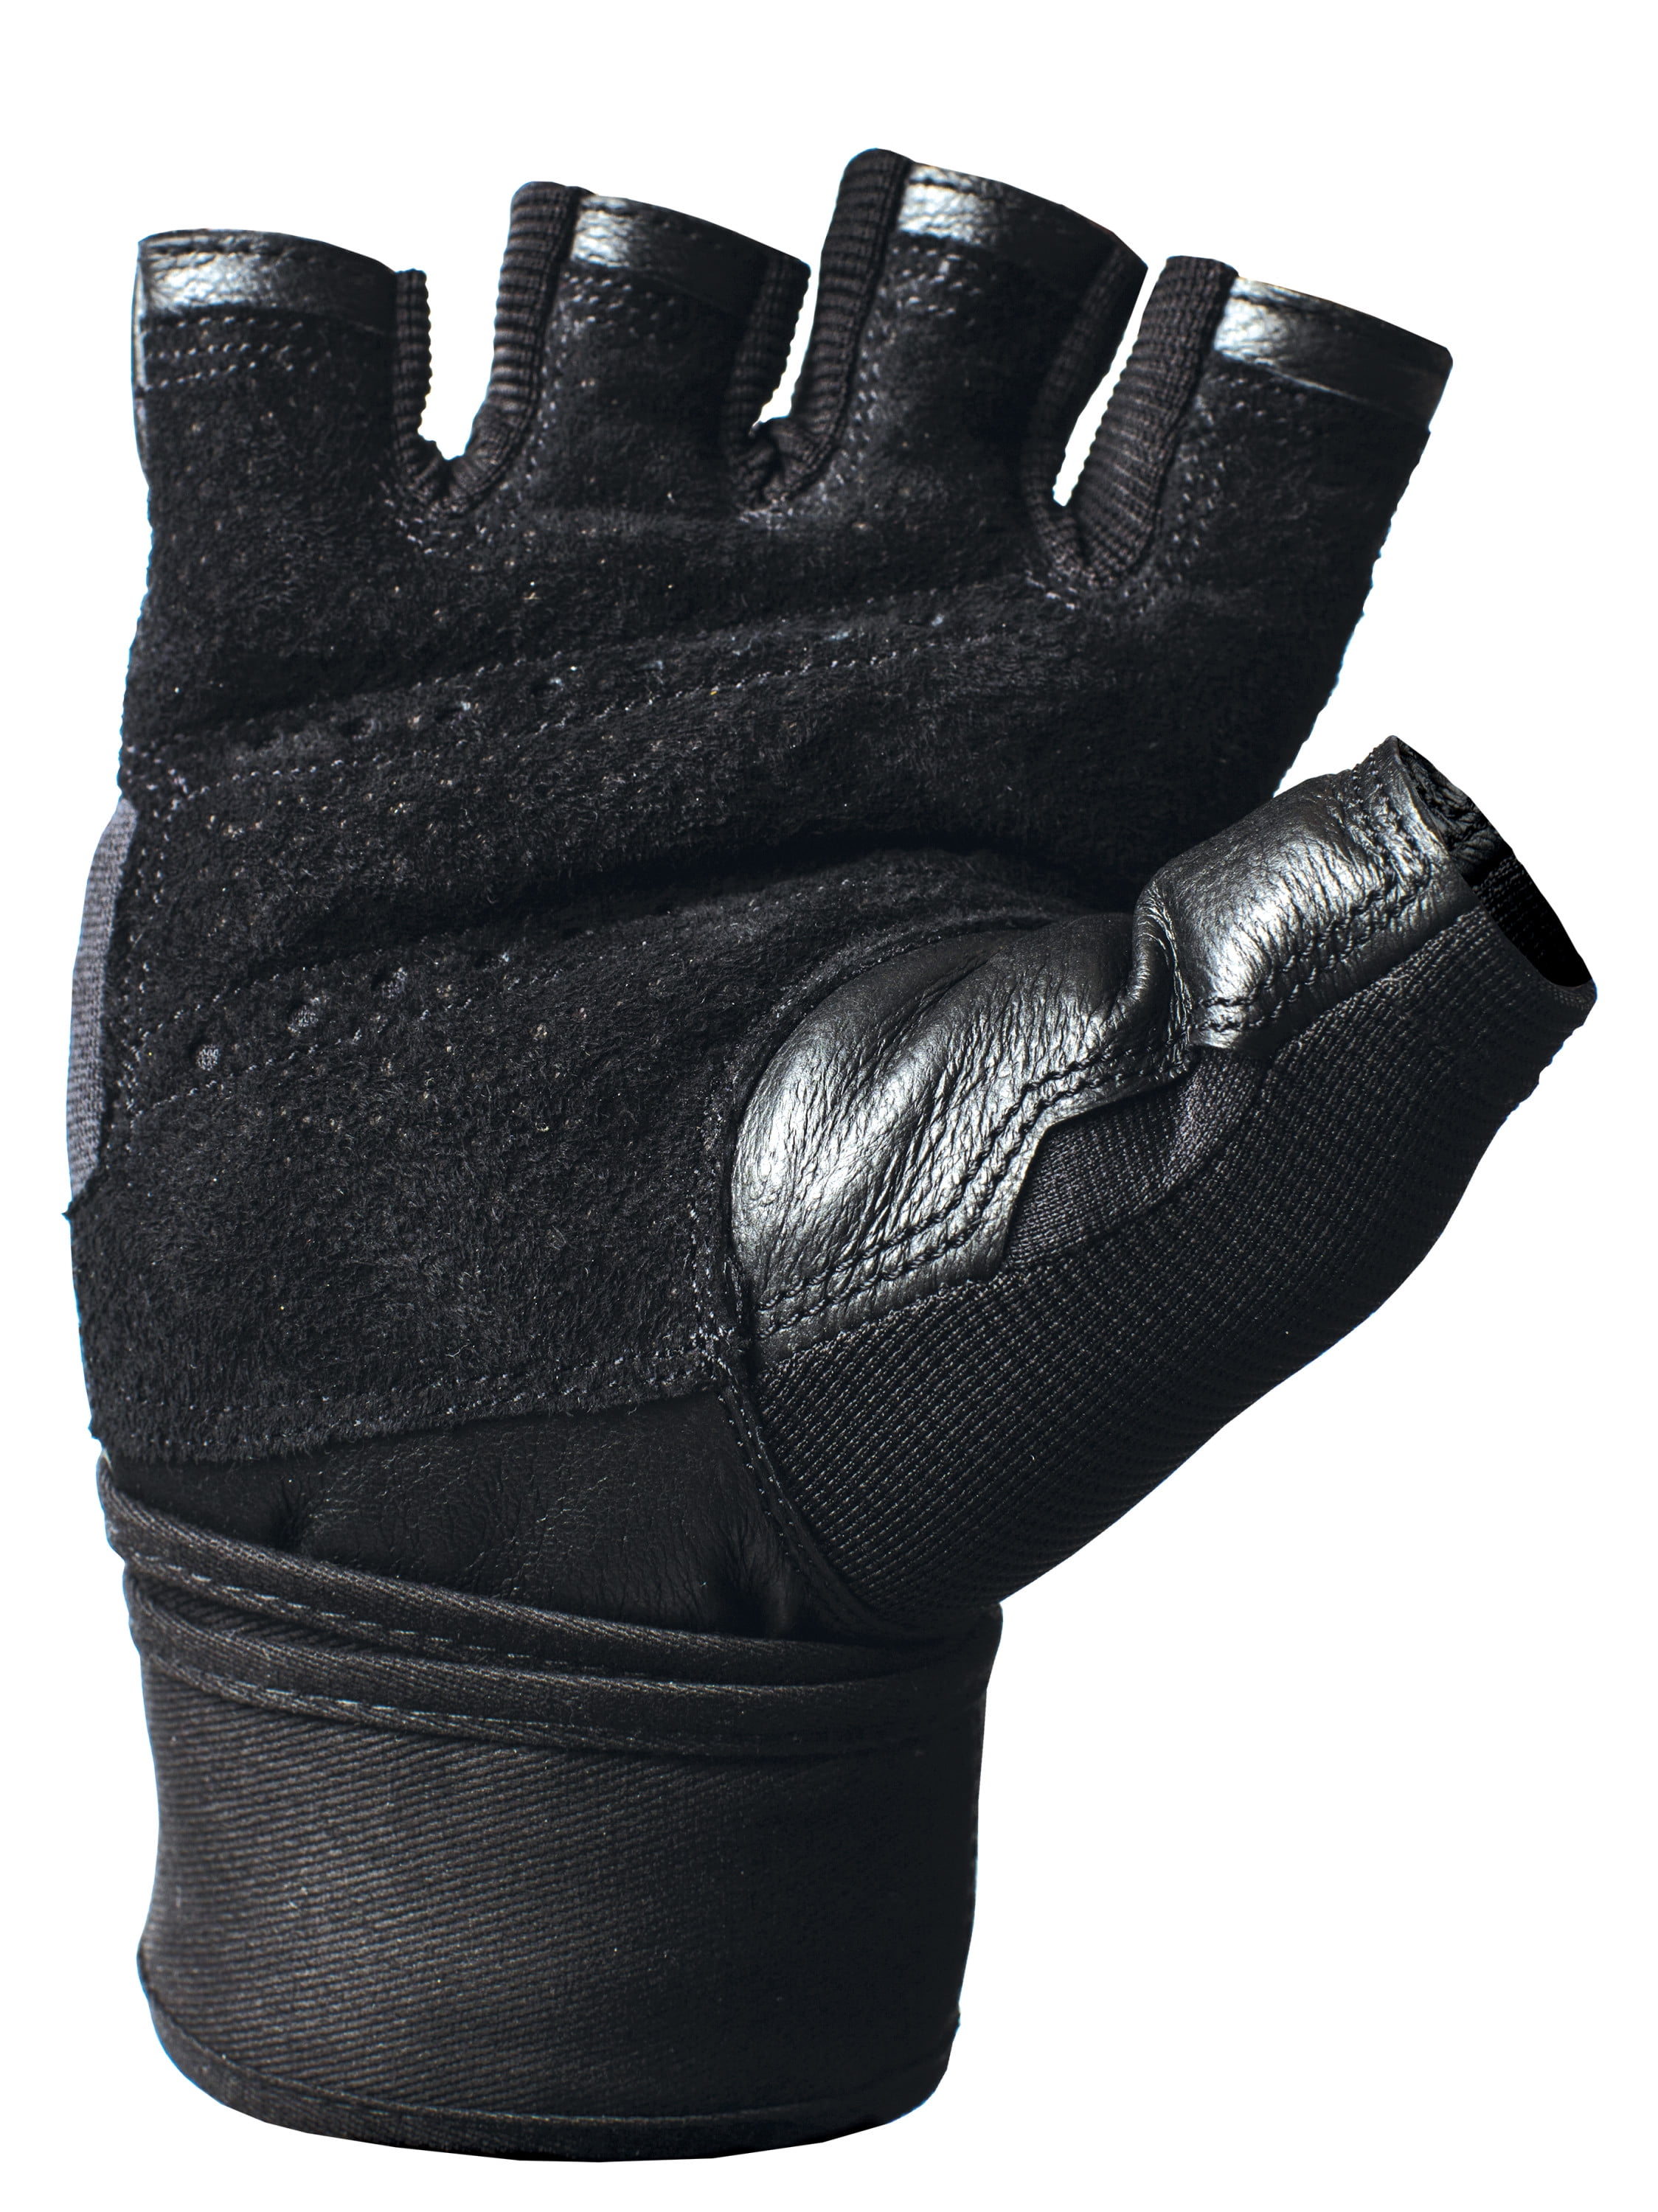 Harbinger Pro Wrist Wrap Weight Lifting Gloves FREE SHIPPING 